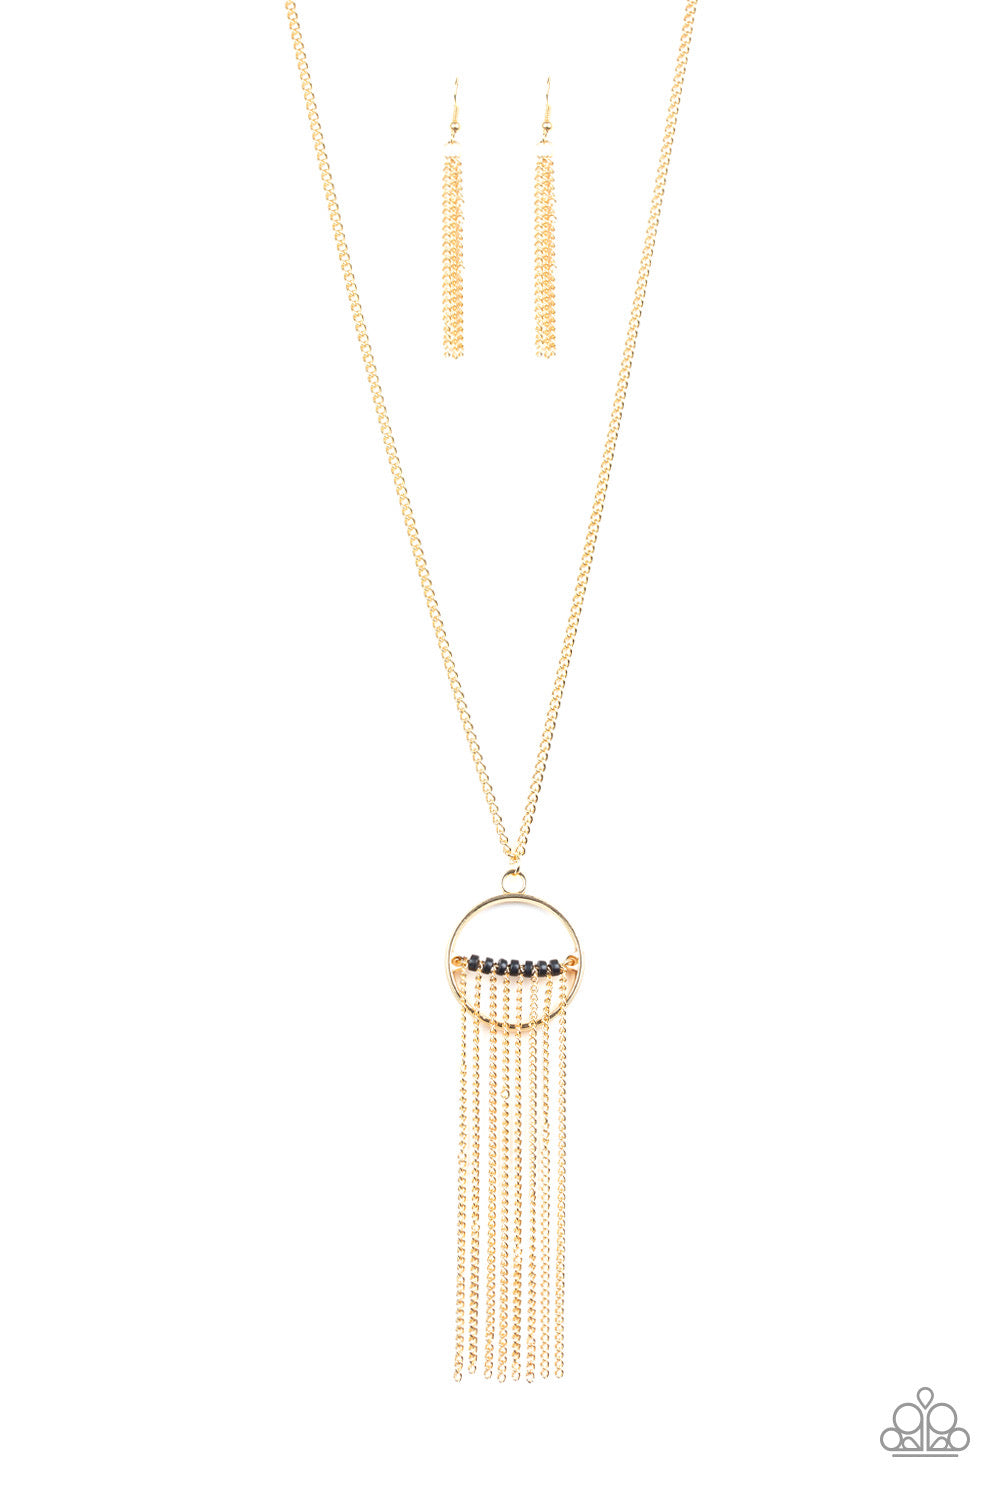 Terra Tassel-Gold Necklace